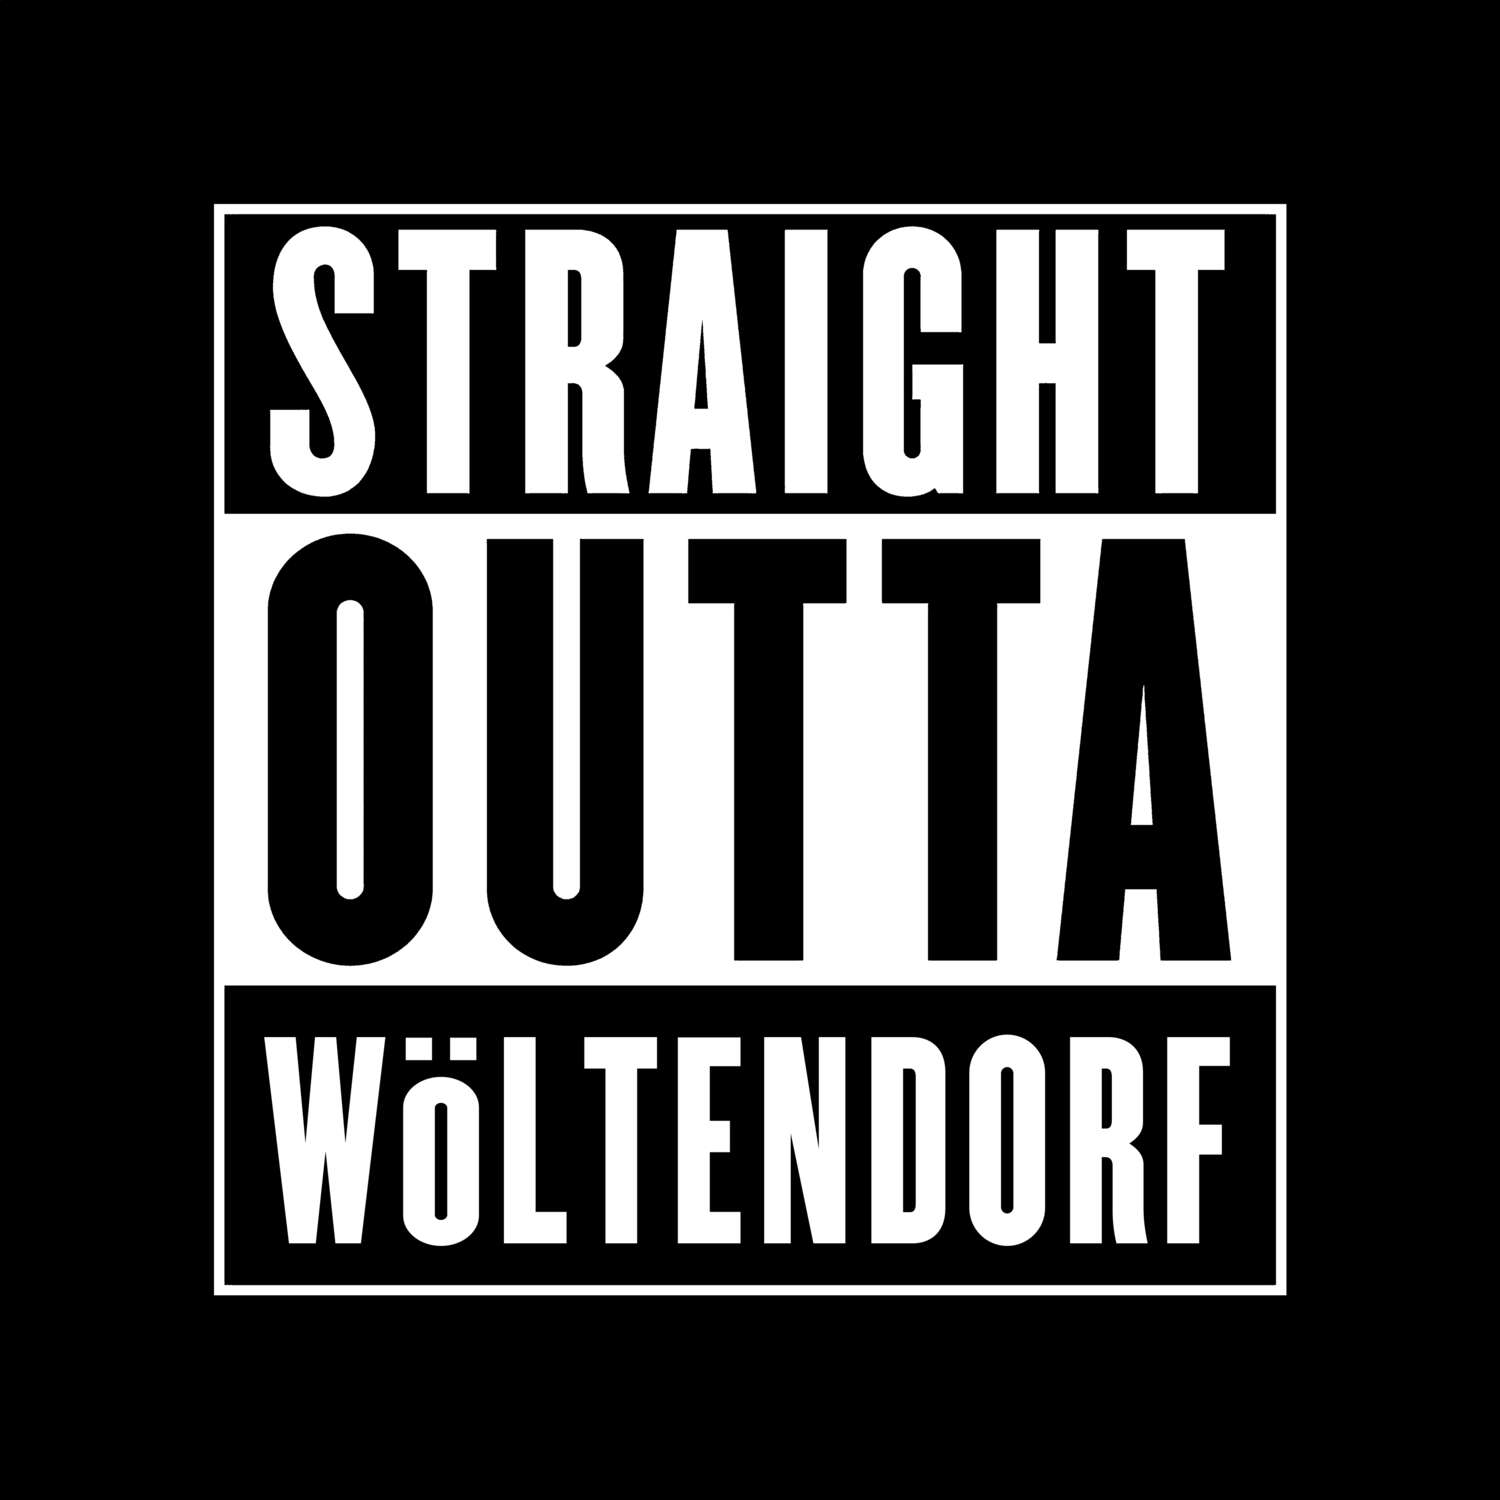 Wöltendorf T-Shirt »Straight Outta«